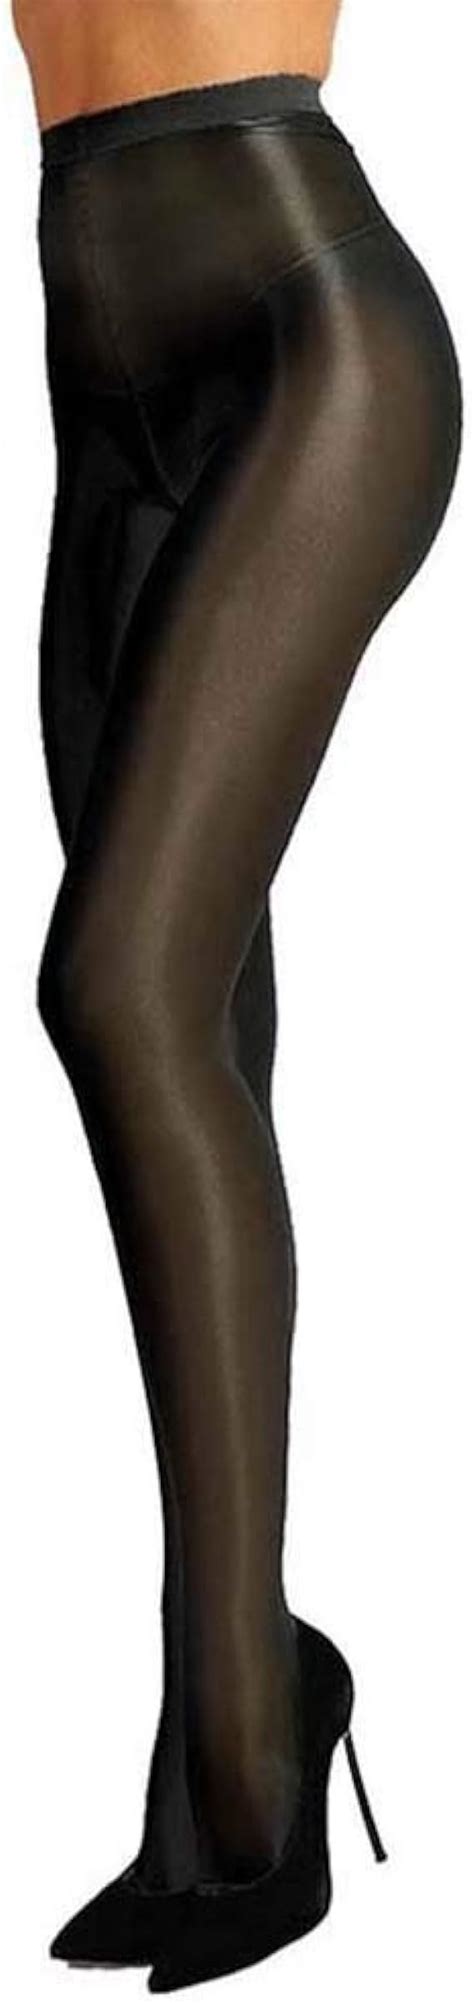 Plus Size Women S 60d Oil Shiny Glossy Pantyhose Shaping Stockings Sexy Flash Socks Ultra